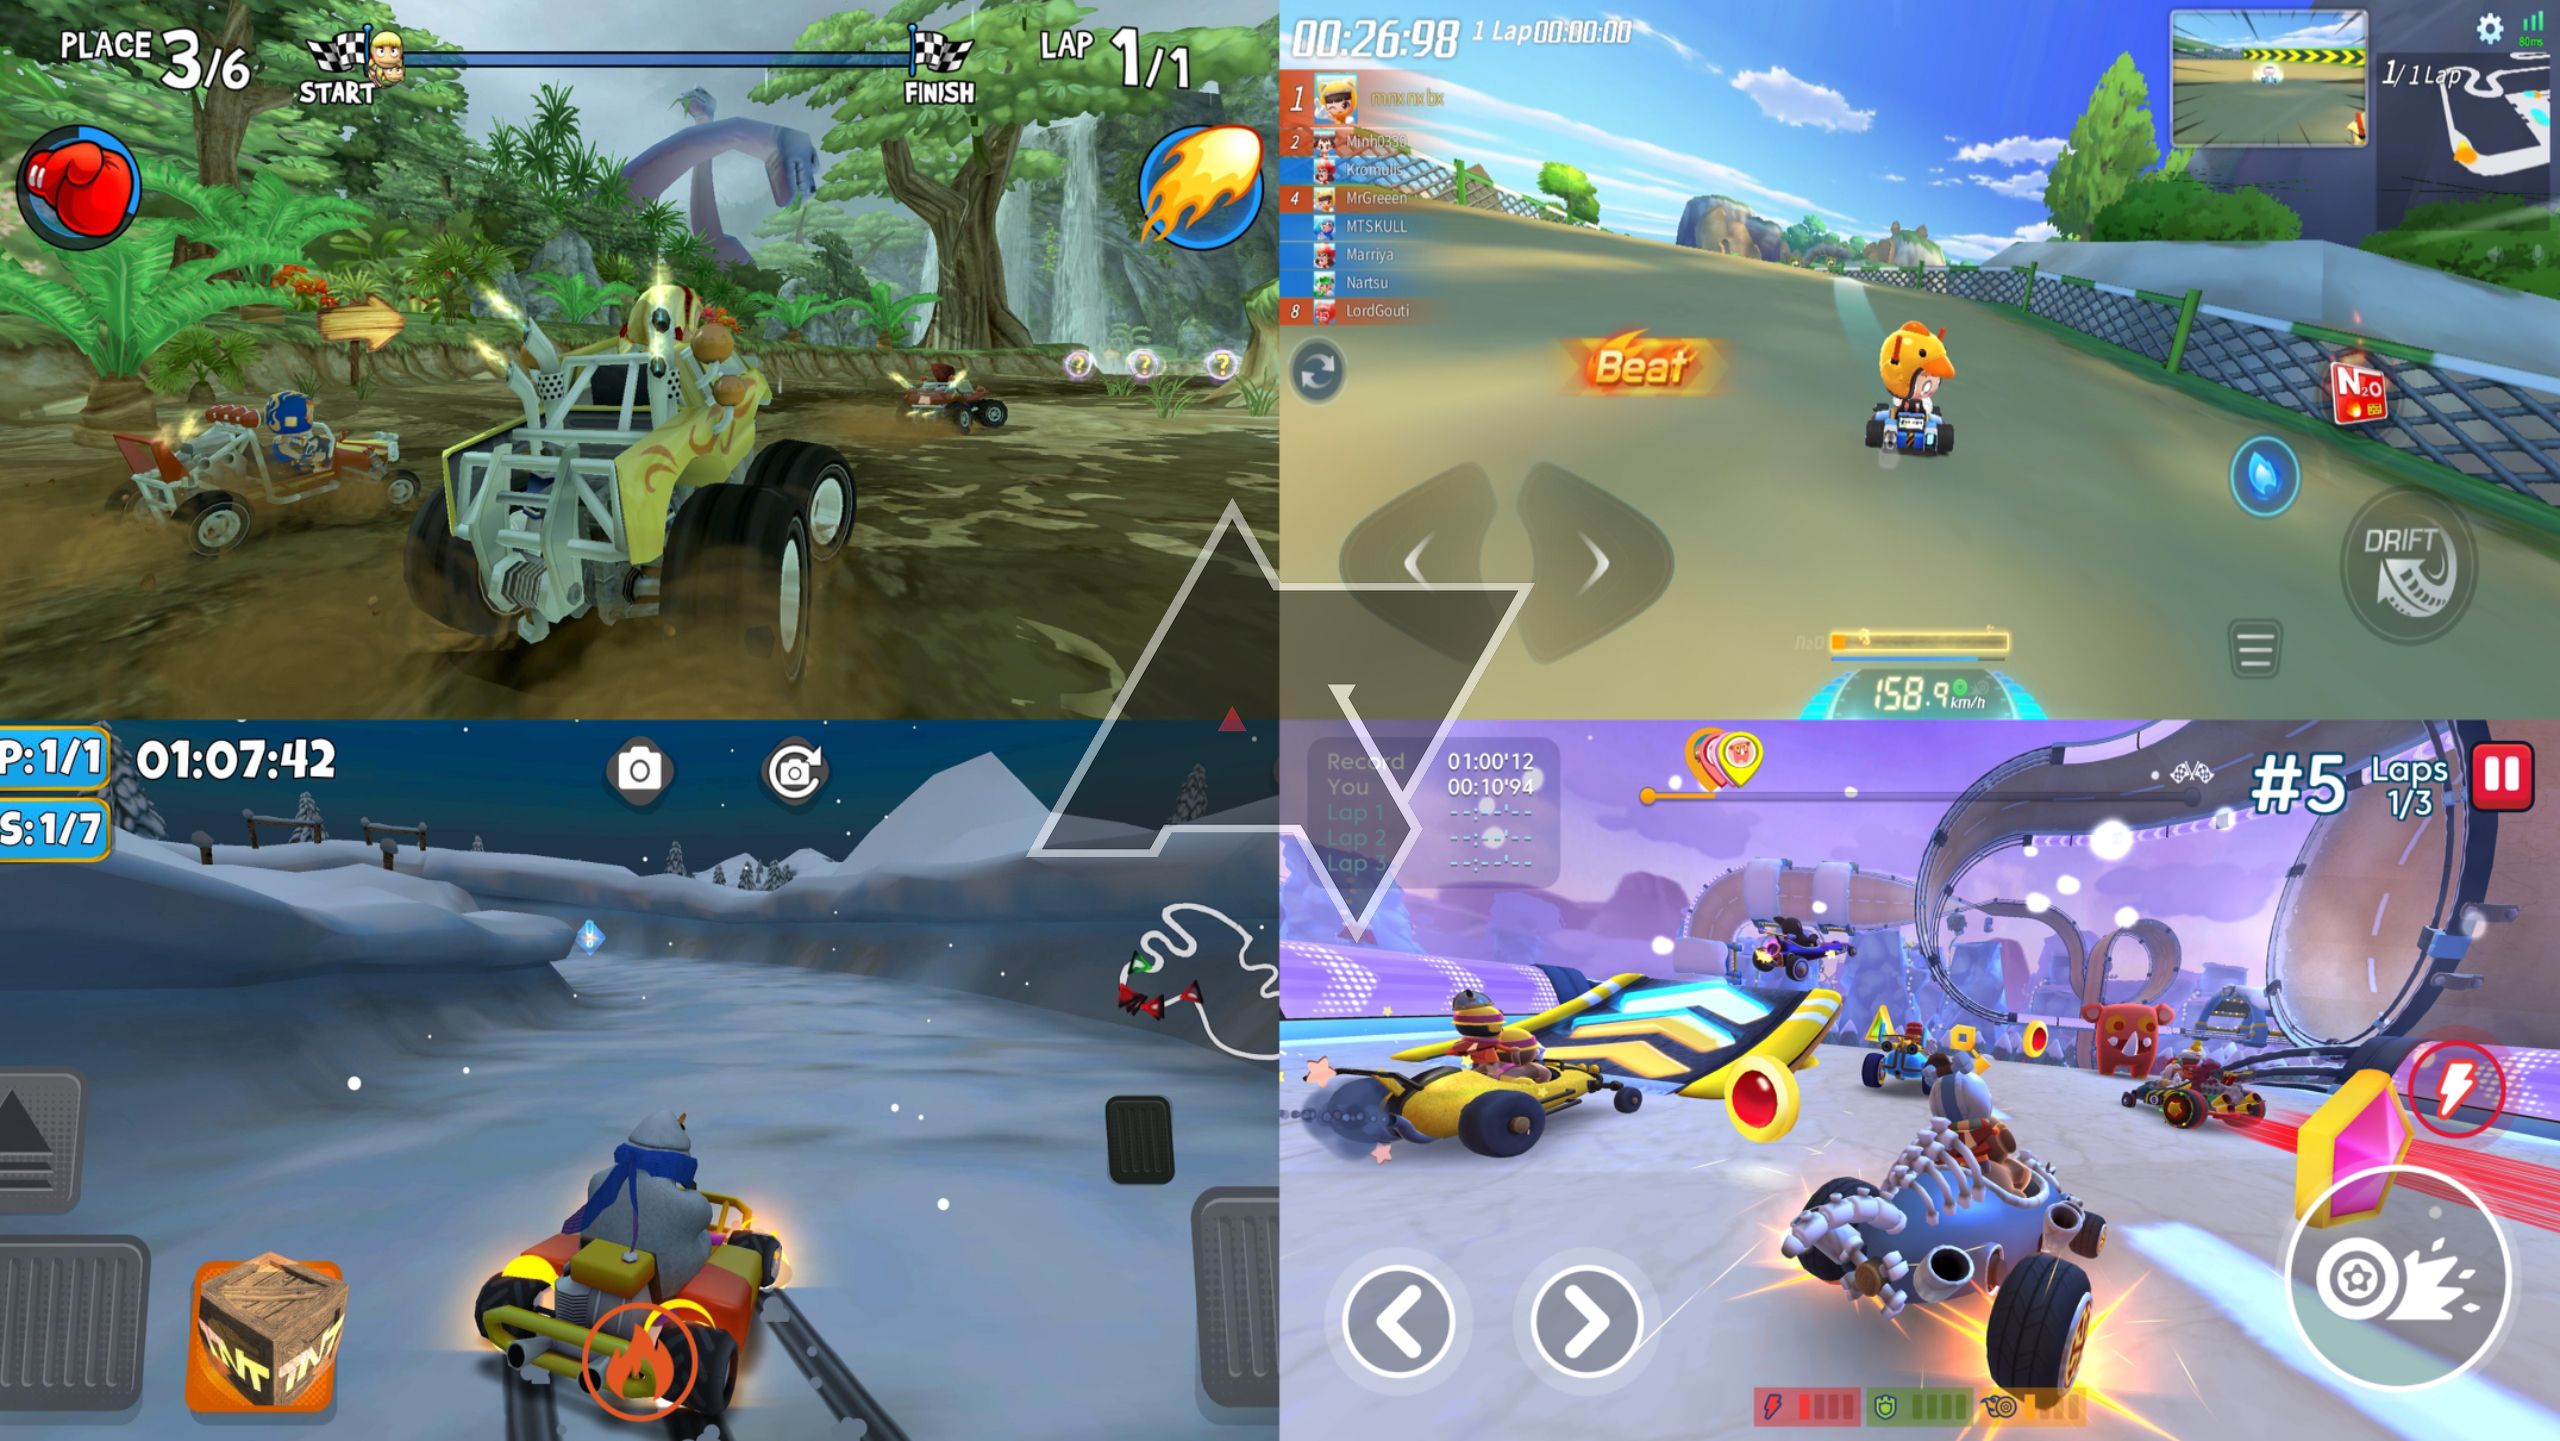 Mario Kart Tour Mobile Android Full WORKING Game APK Mod Free